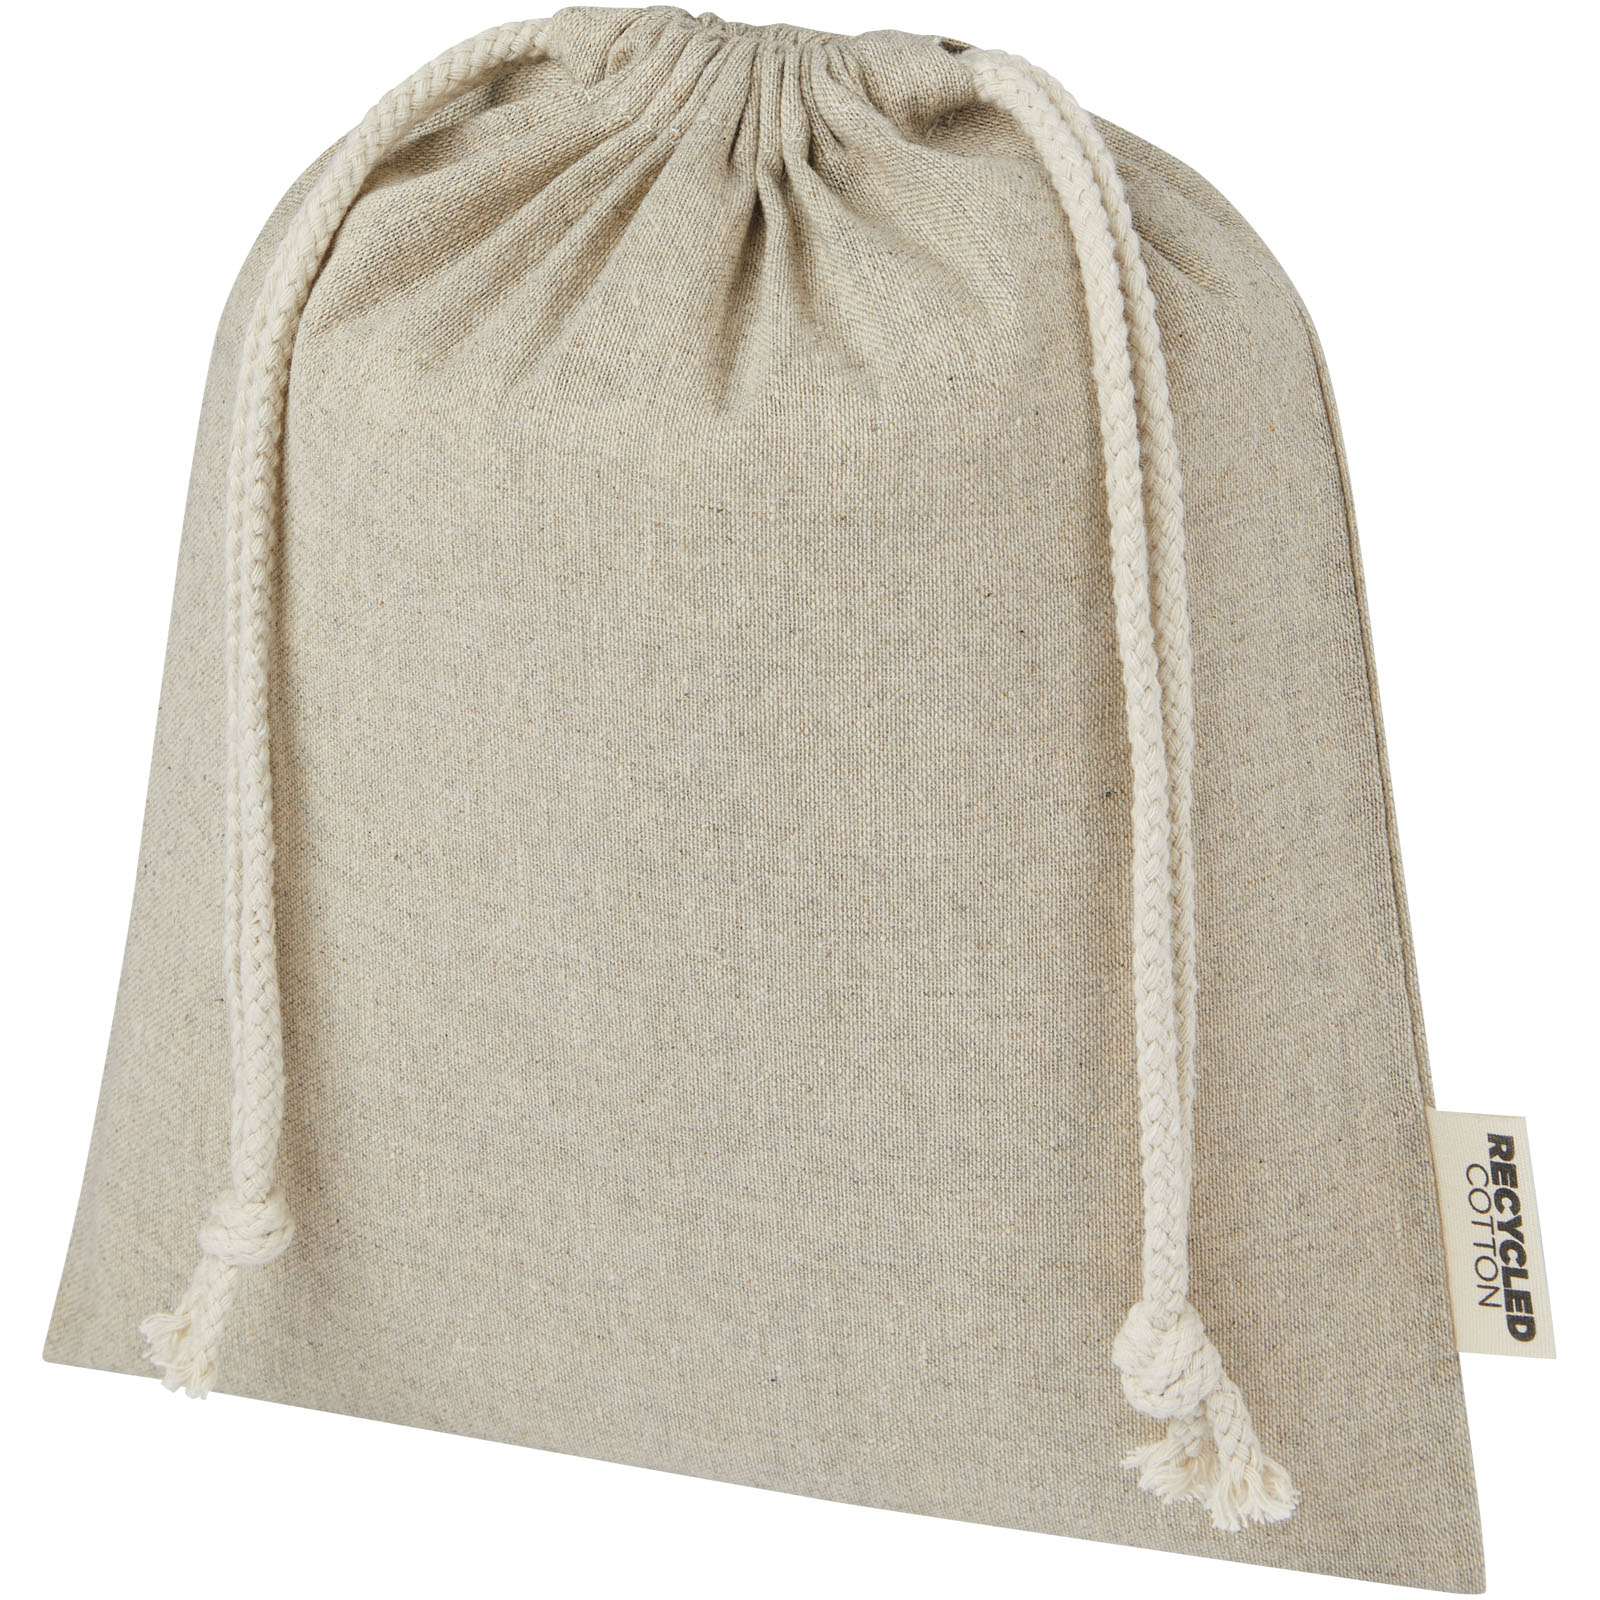 Sacs - Sac cadeau moyen Pheebs en coton recyclé GRS 150 g/m² de 1,5 L